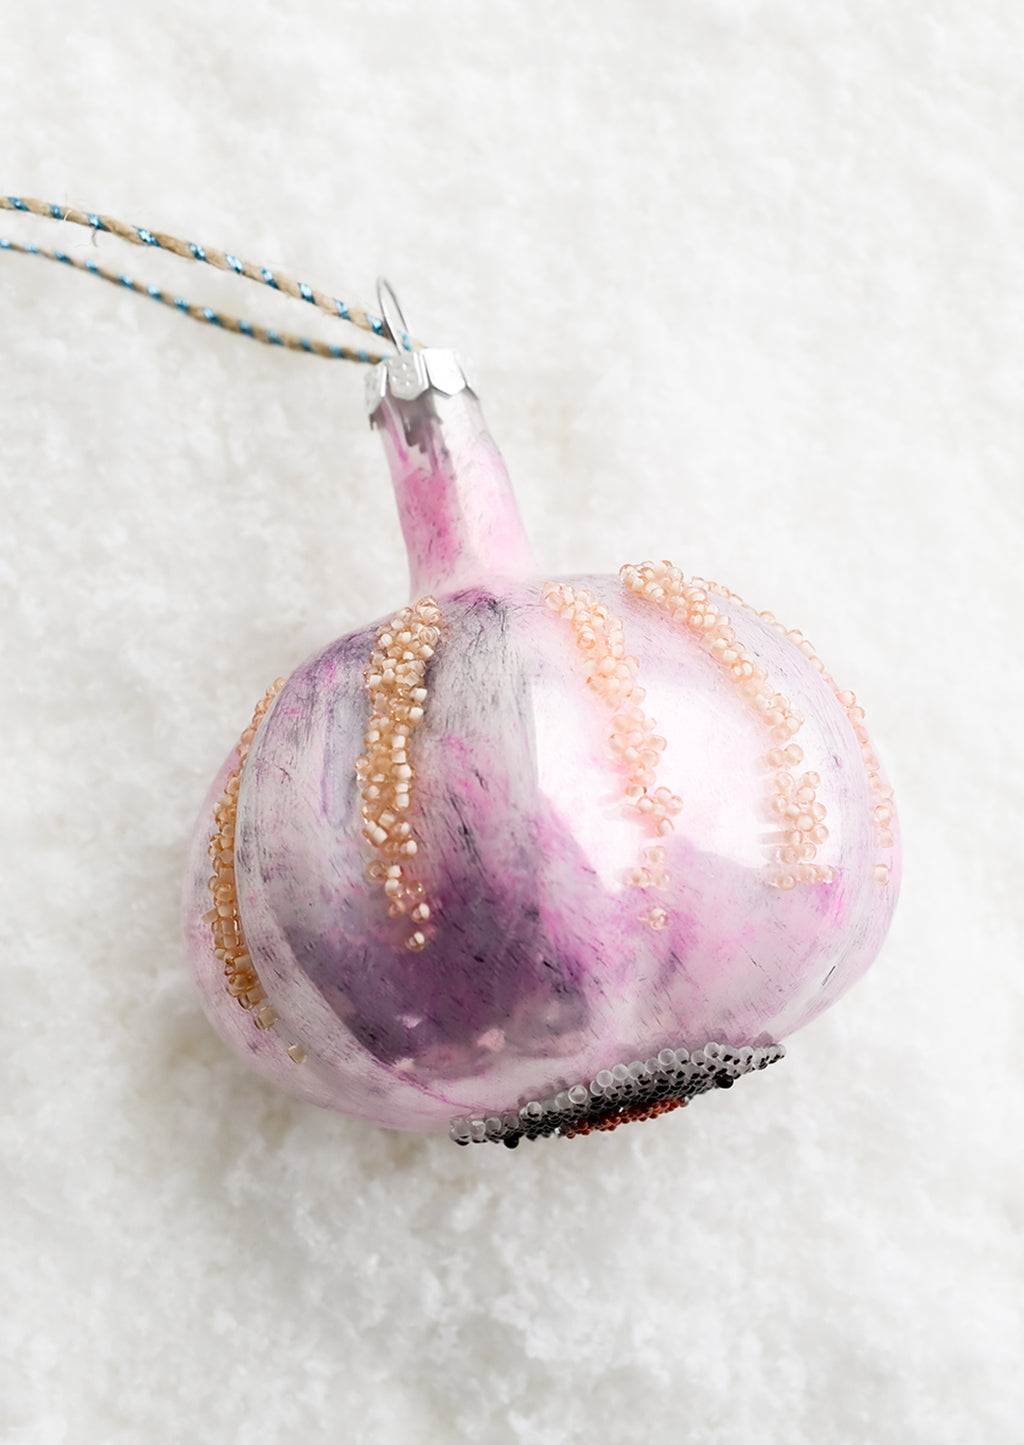 1: A decorative glass ornament in the shape of garlic bulb.